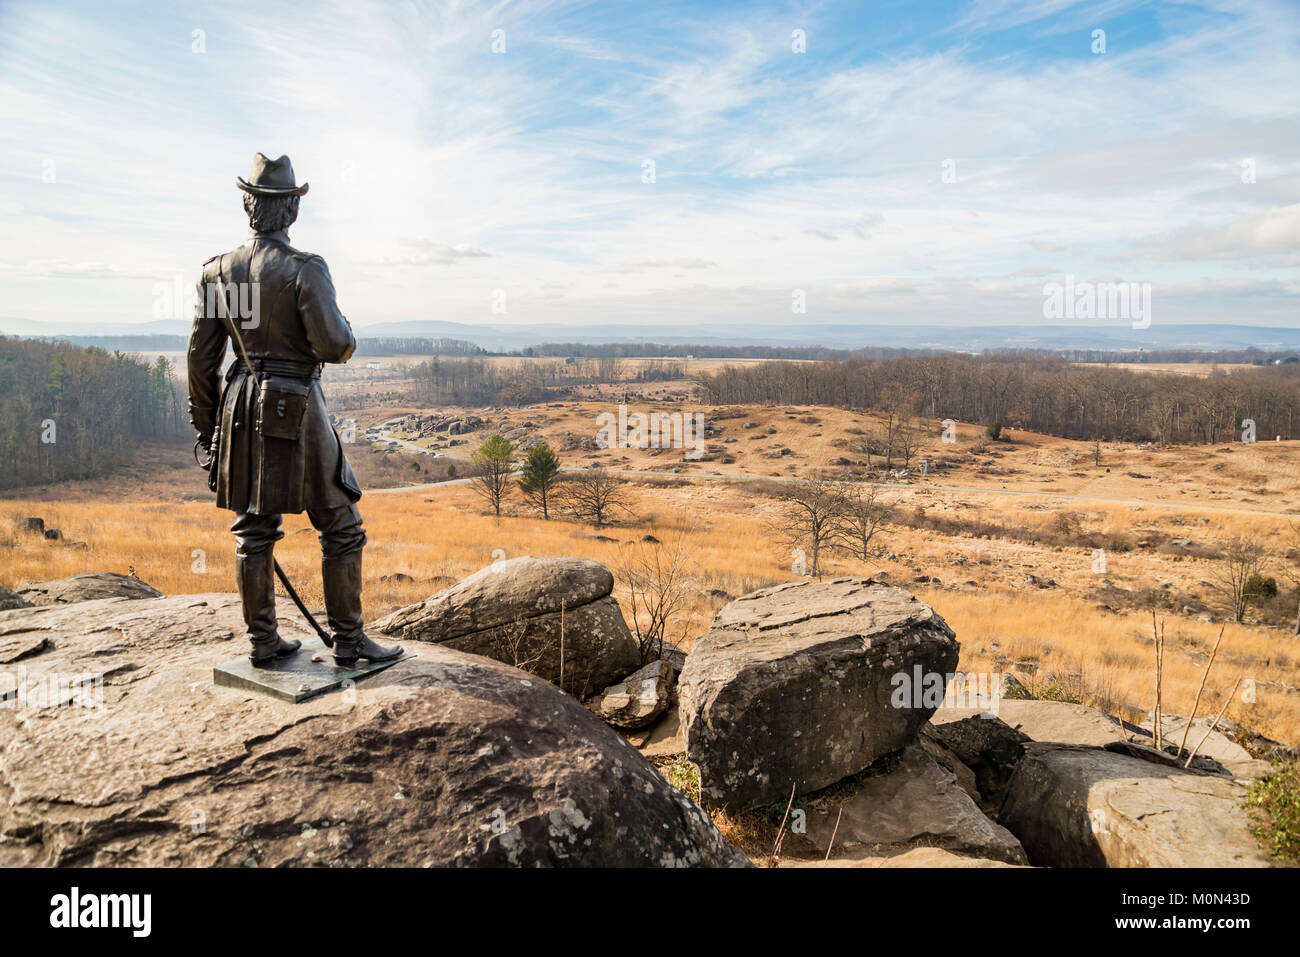 Devils den gettysburg hi-res stock photography and images - Alamy